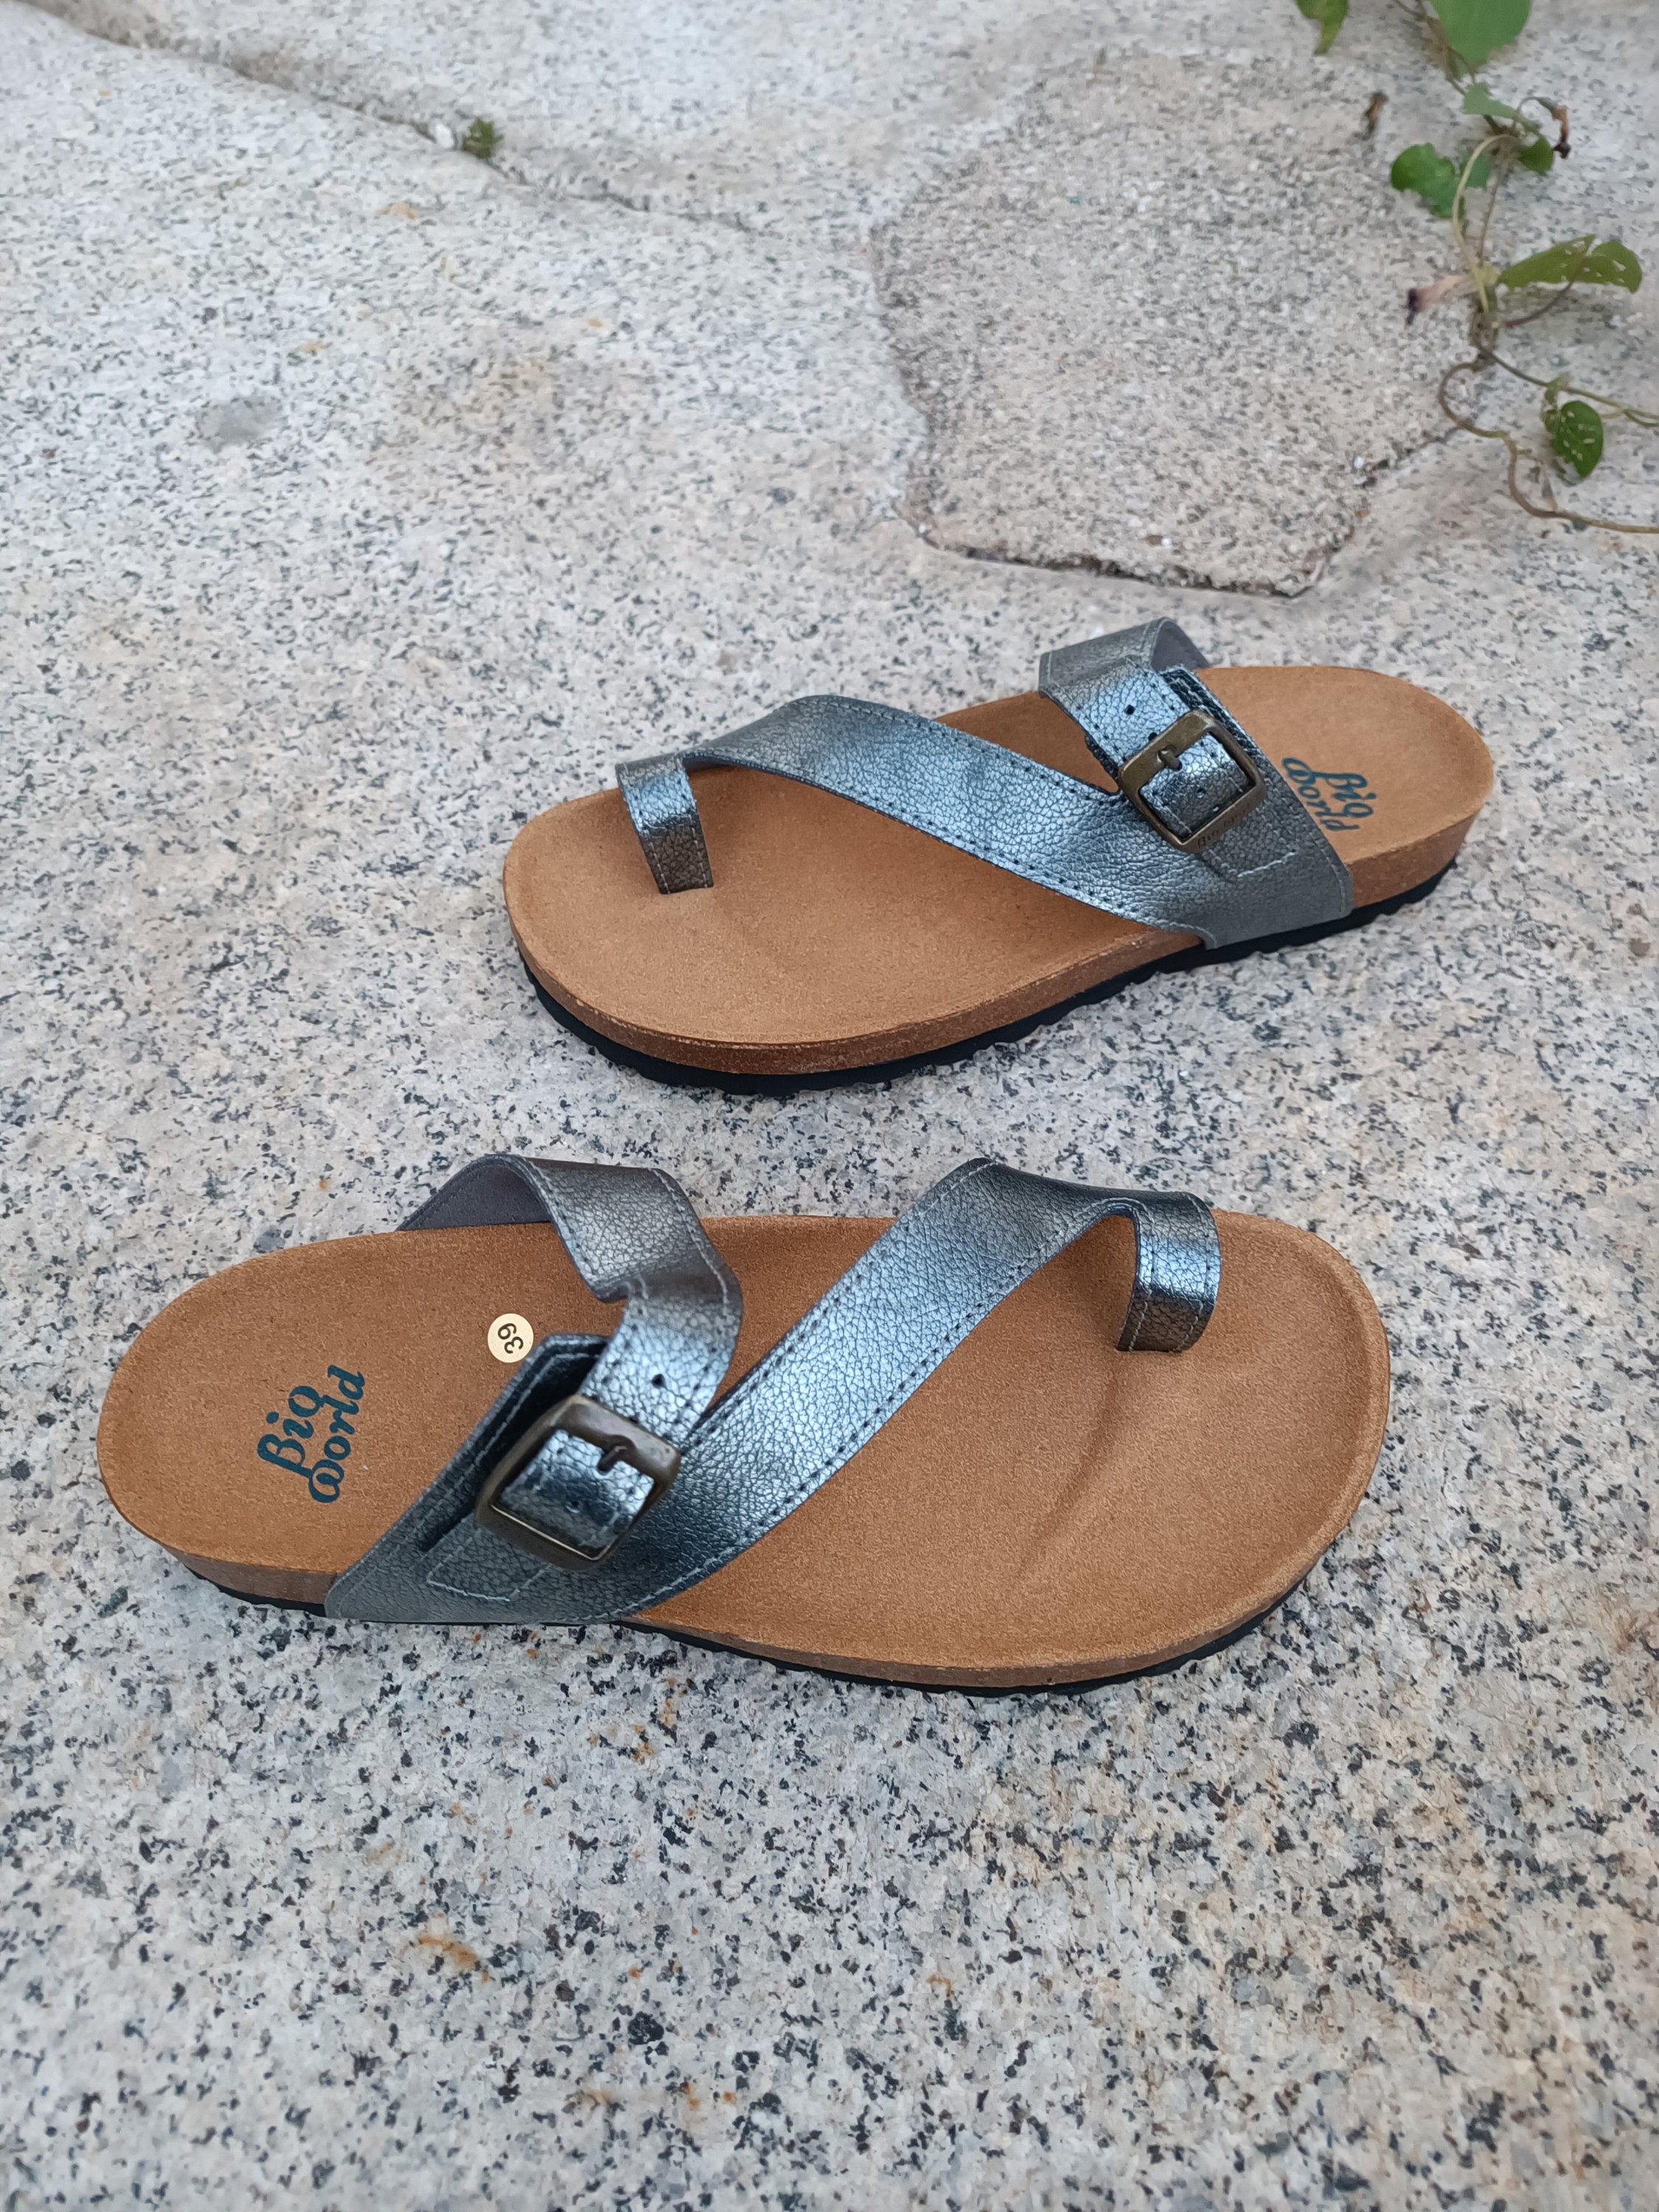 BAREFOOT HUIDOBRO color oro, sandalias para mujer y hombre, calzado  descalzo, sandalias veganas, eco-friendly, barefoot.: 66,00 € - BIOWORLD  SHOES